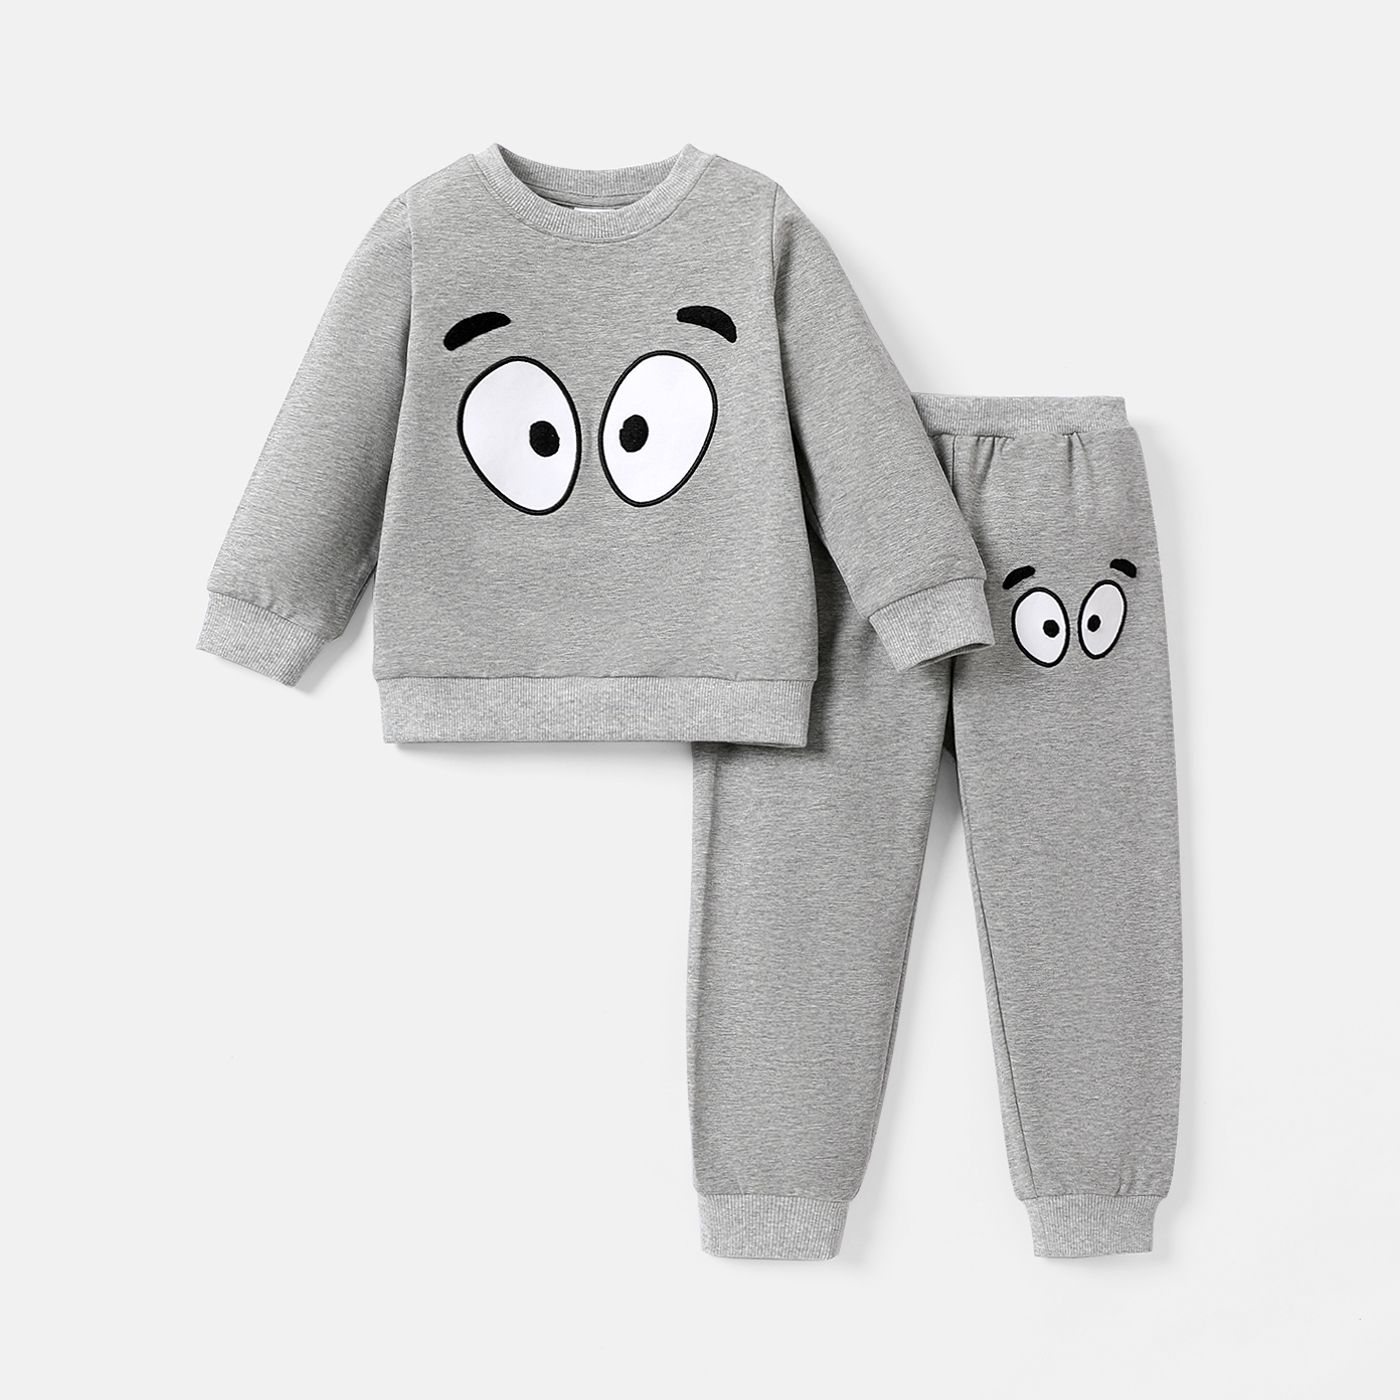 2pcs Toddler Boy Face Graphic Print Cotton Sweatshirt And Pants Set